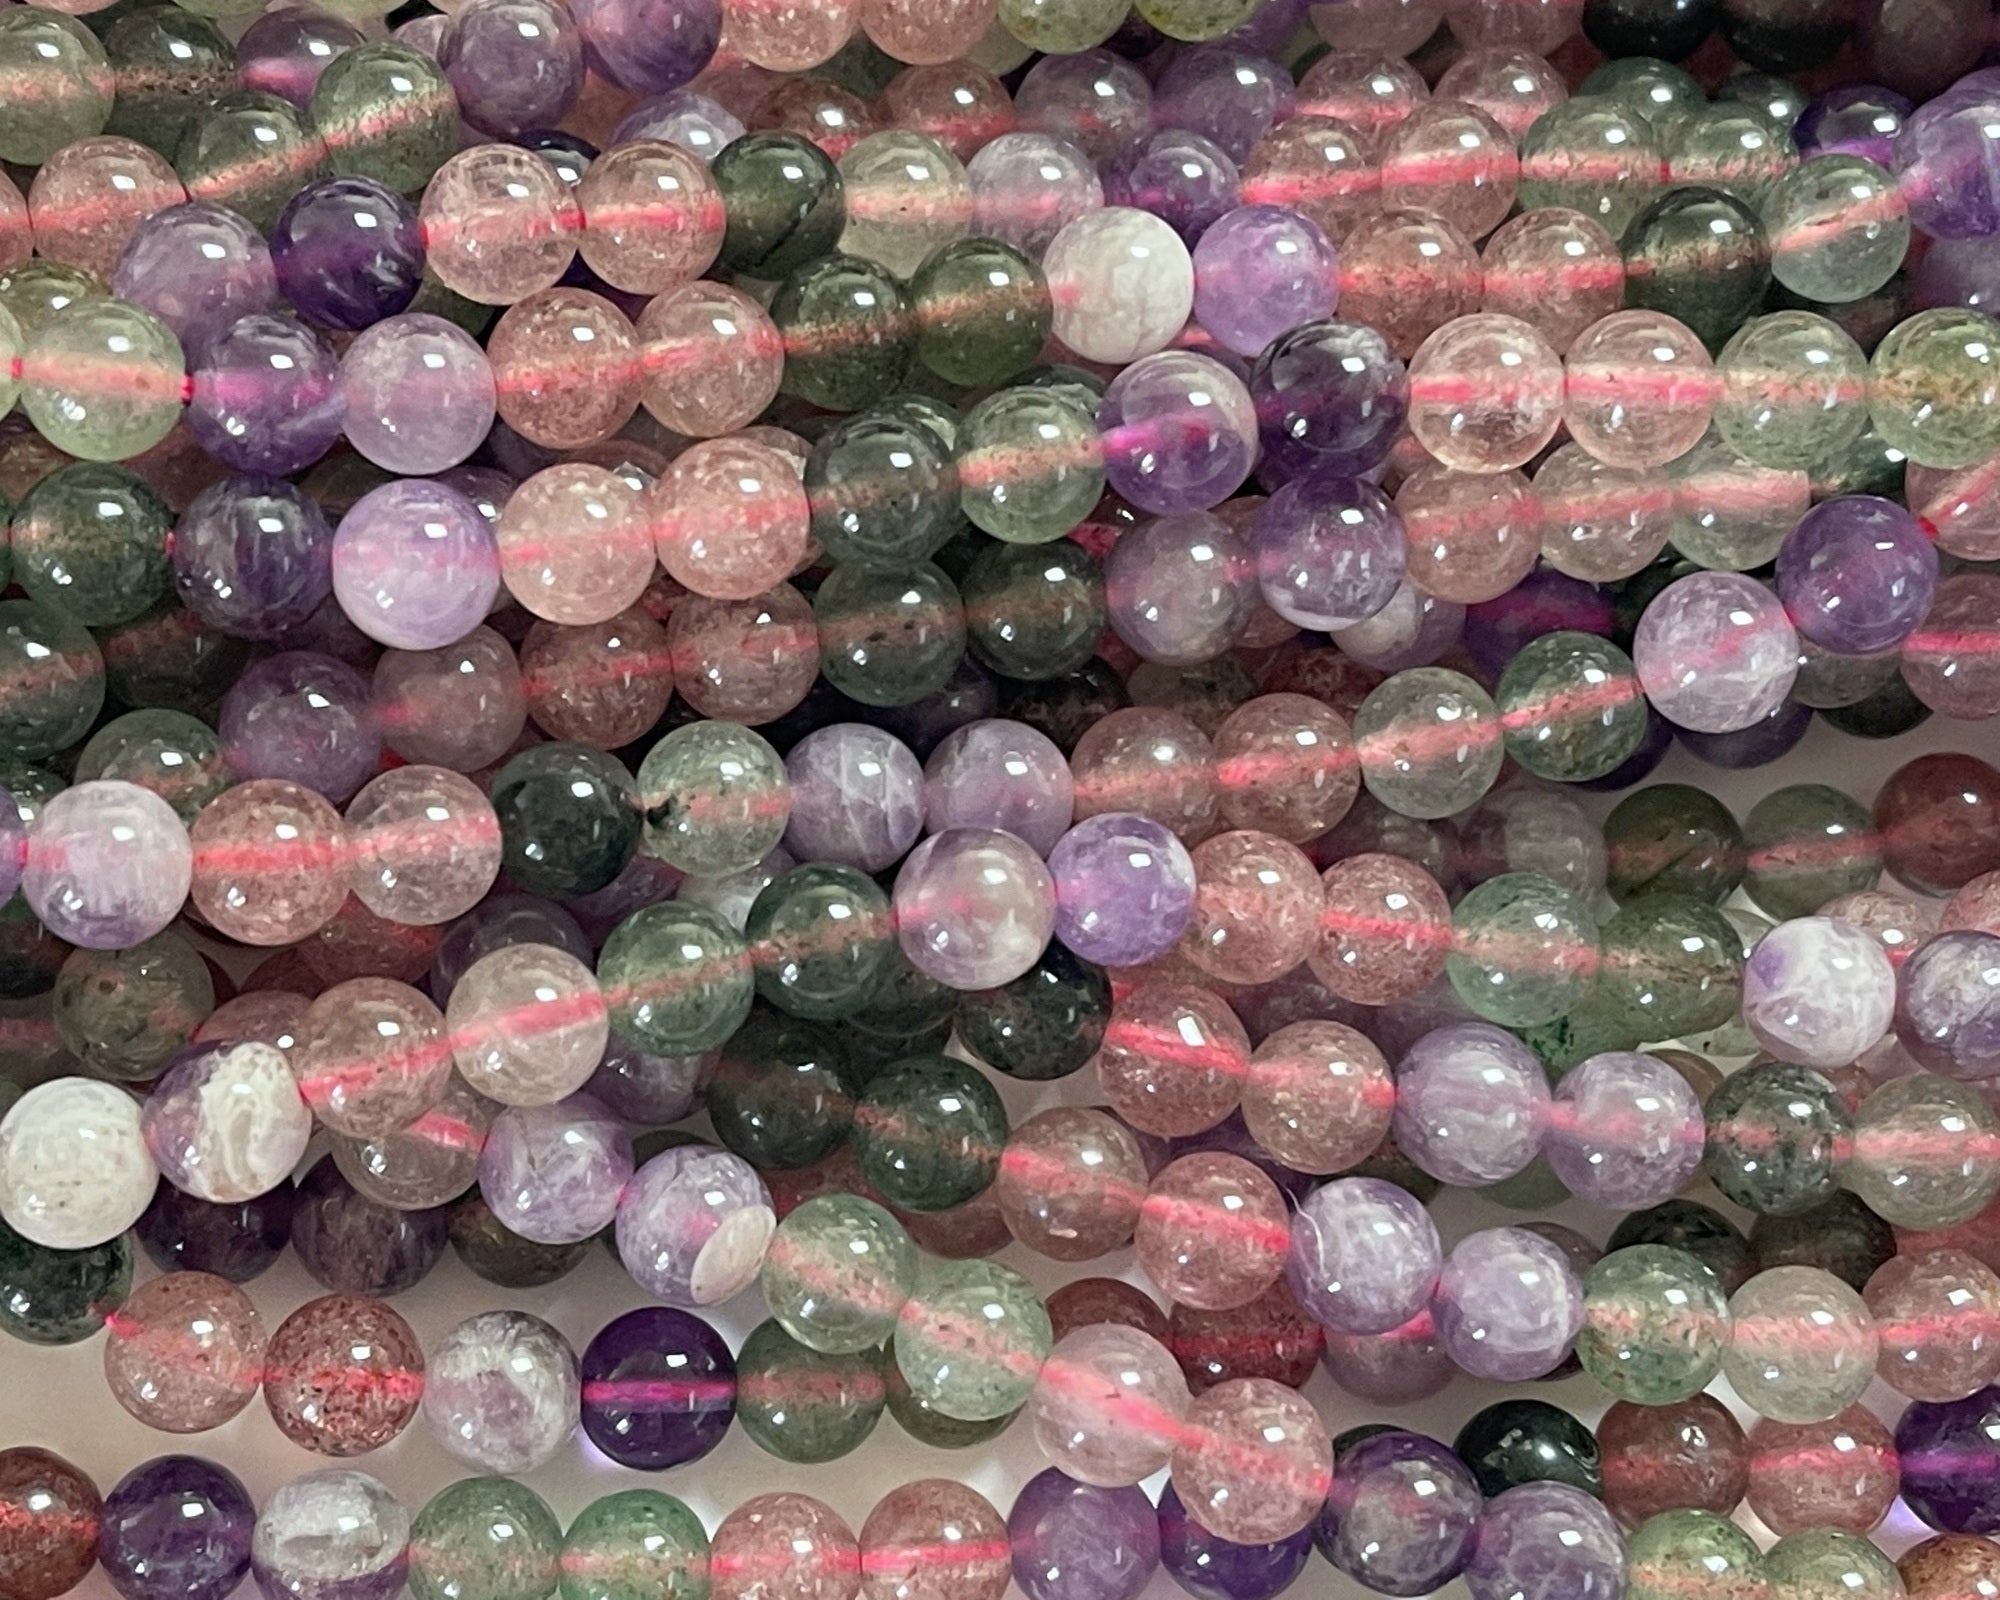 Strawberry Quartz Amethyst mix 6mm round beads 15" strand